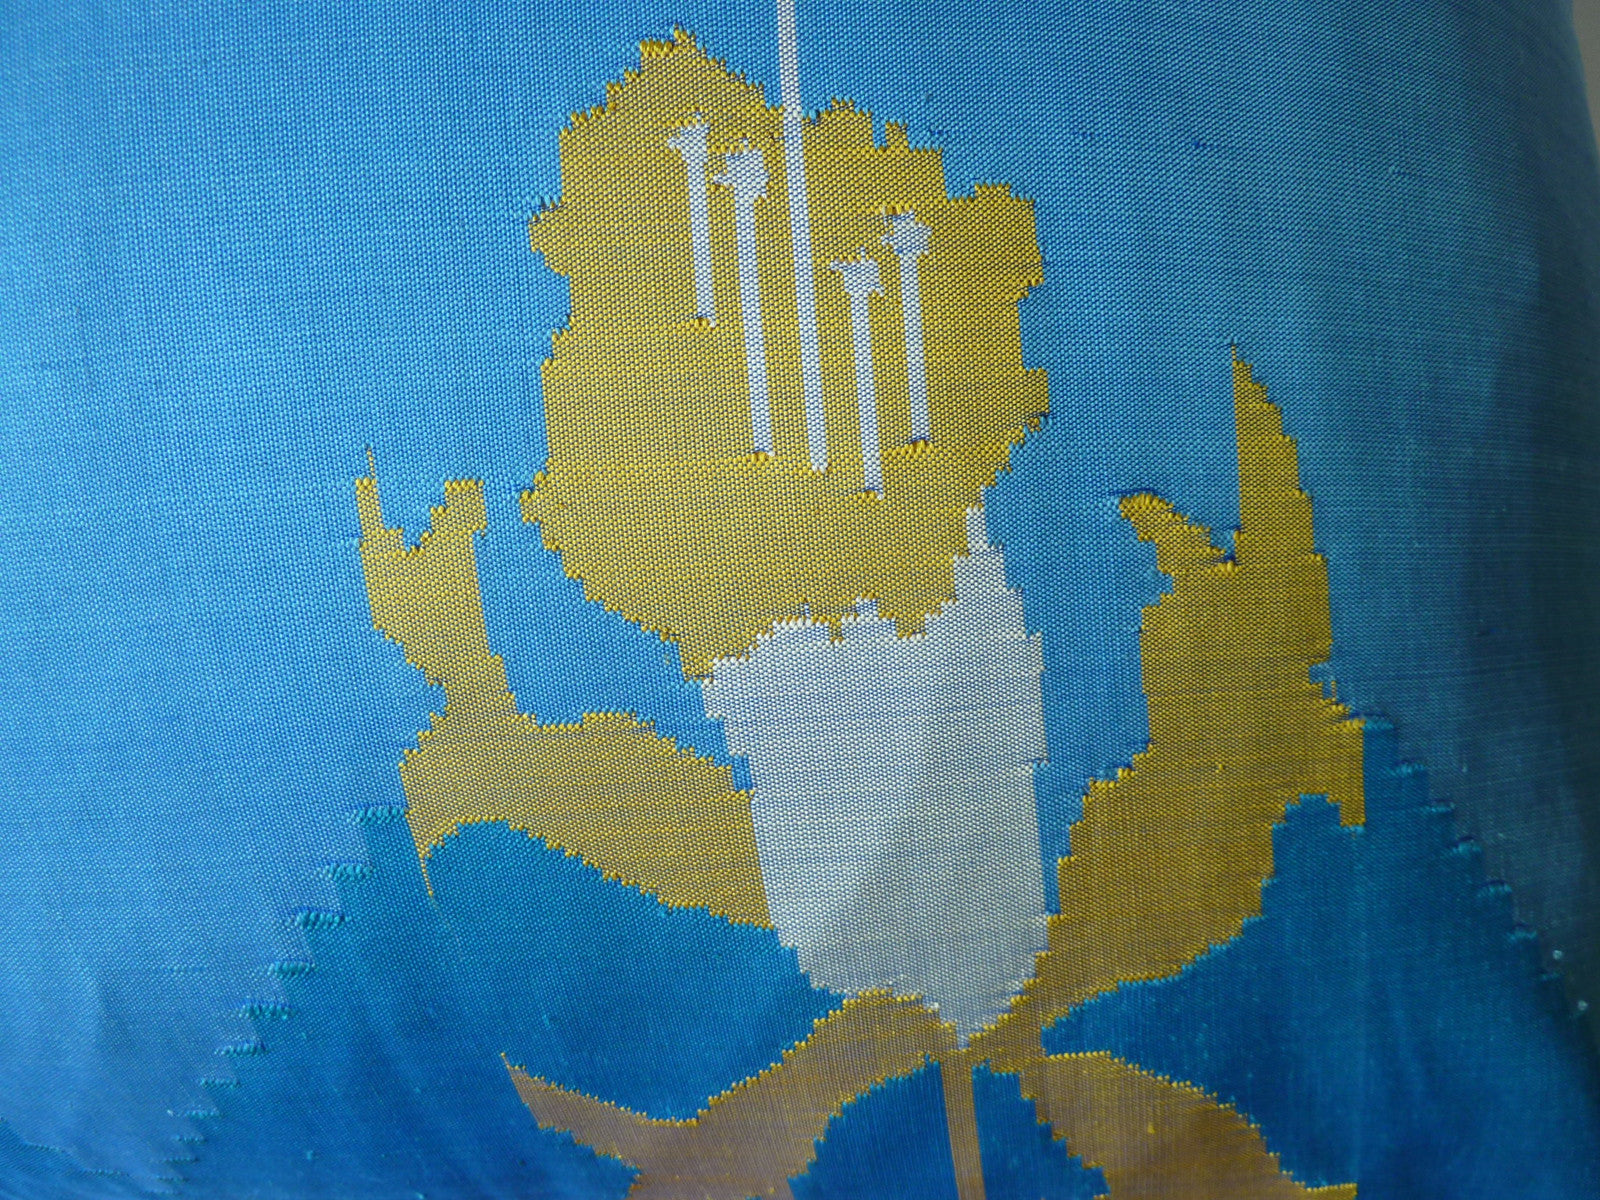 Burmese Silk 30 inch King Size Square Pillows Royal Blue